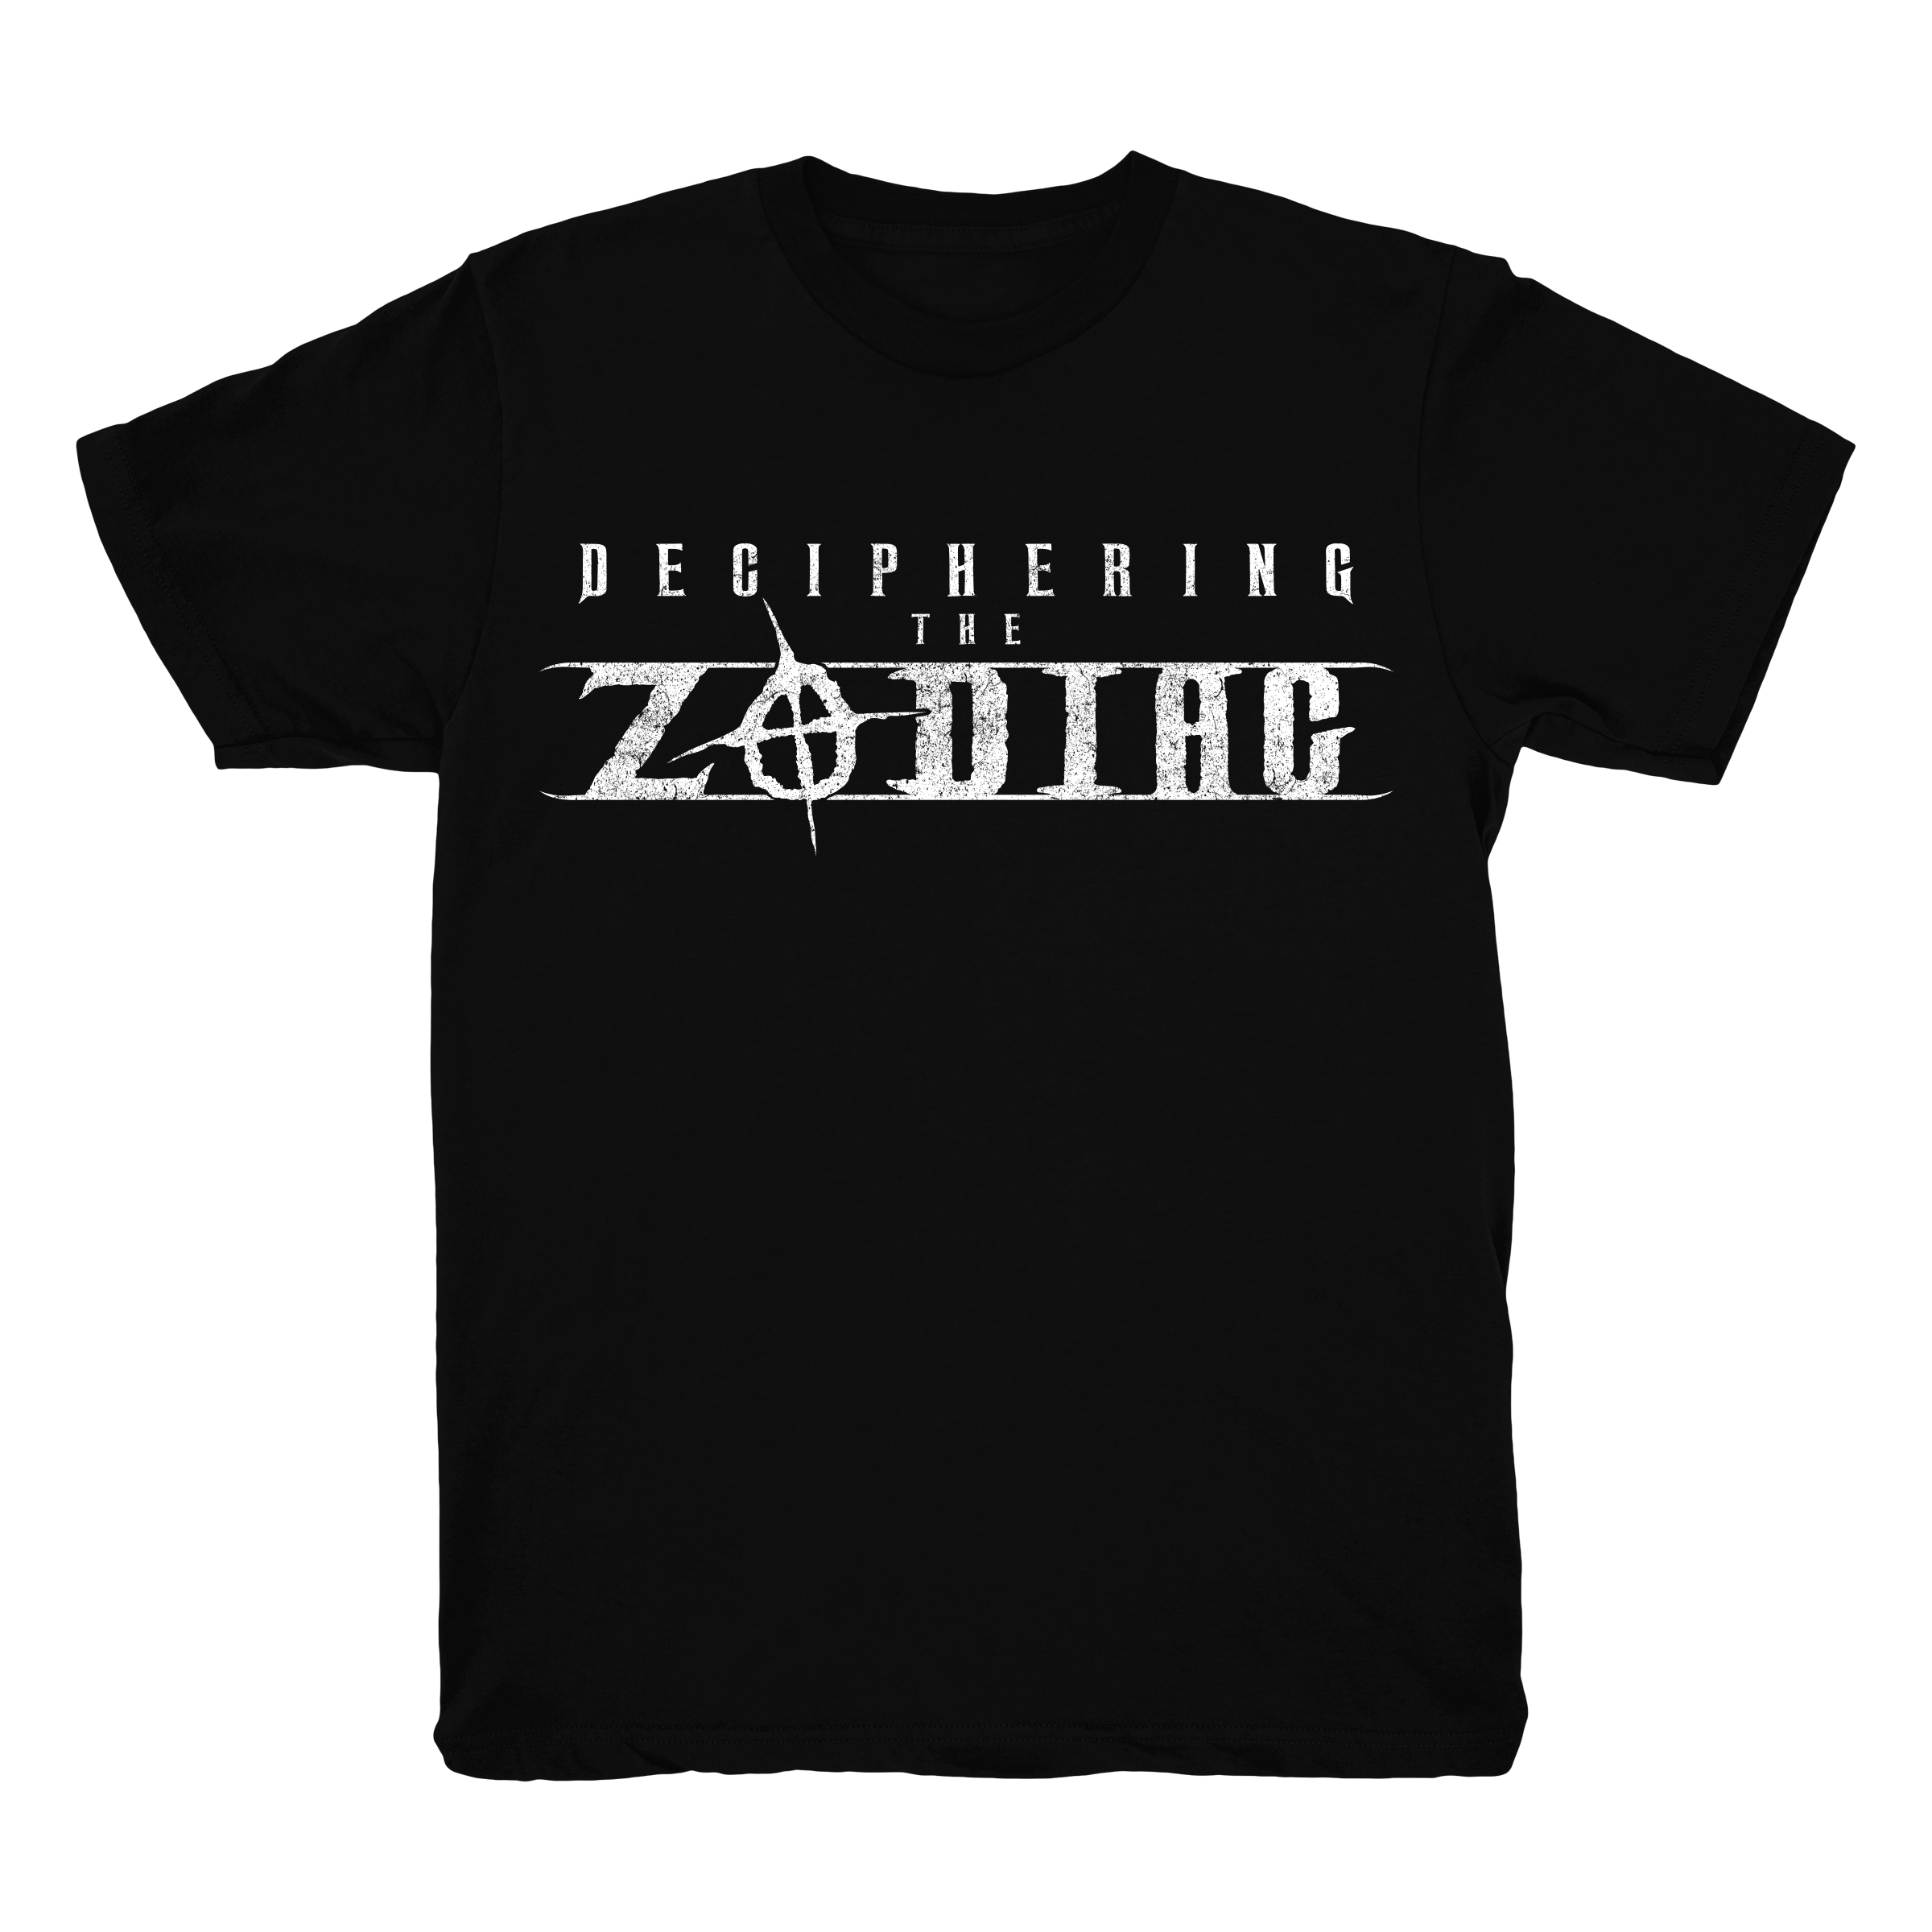 Deciphering The Zodiac Shirt Mockup.jpg